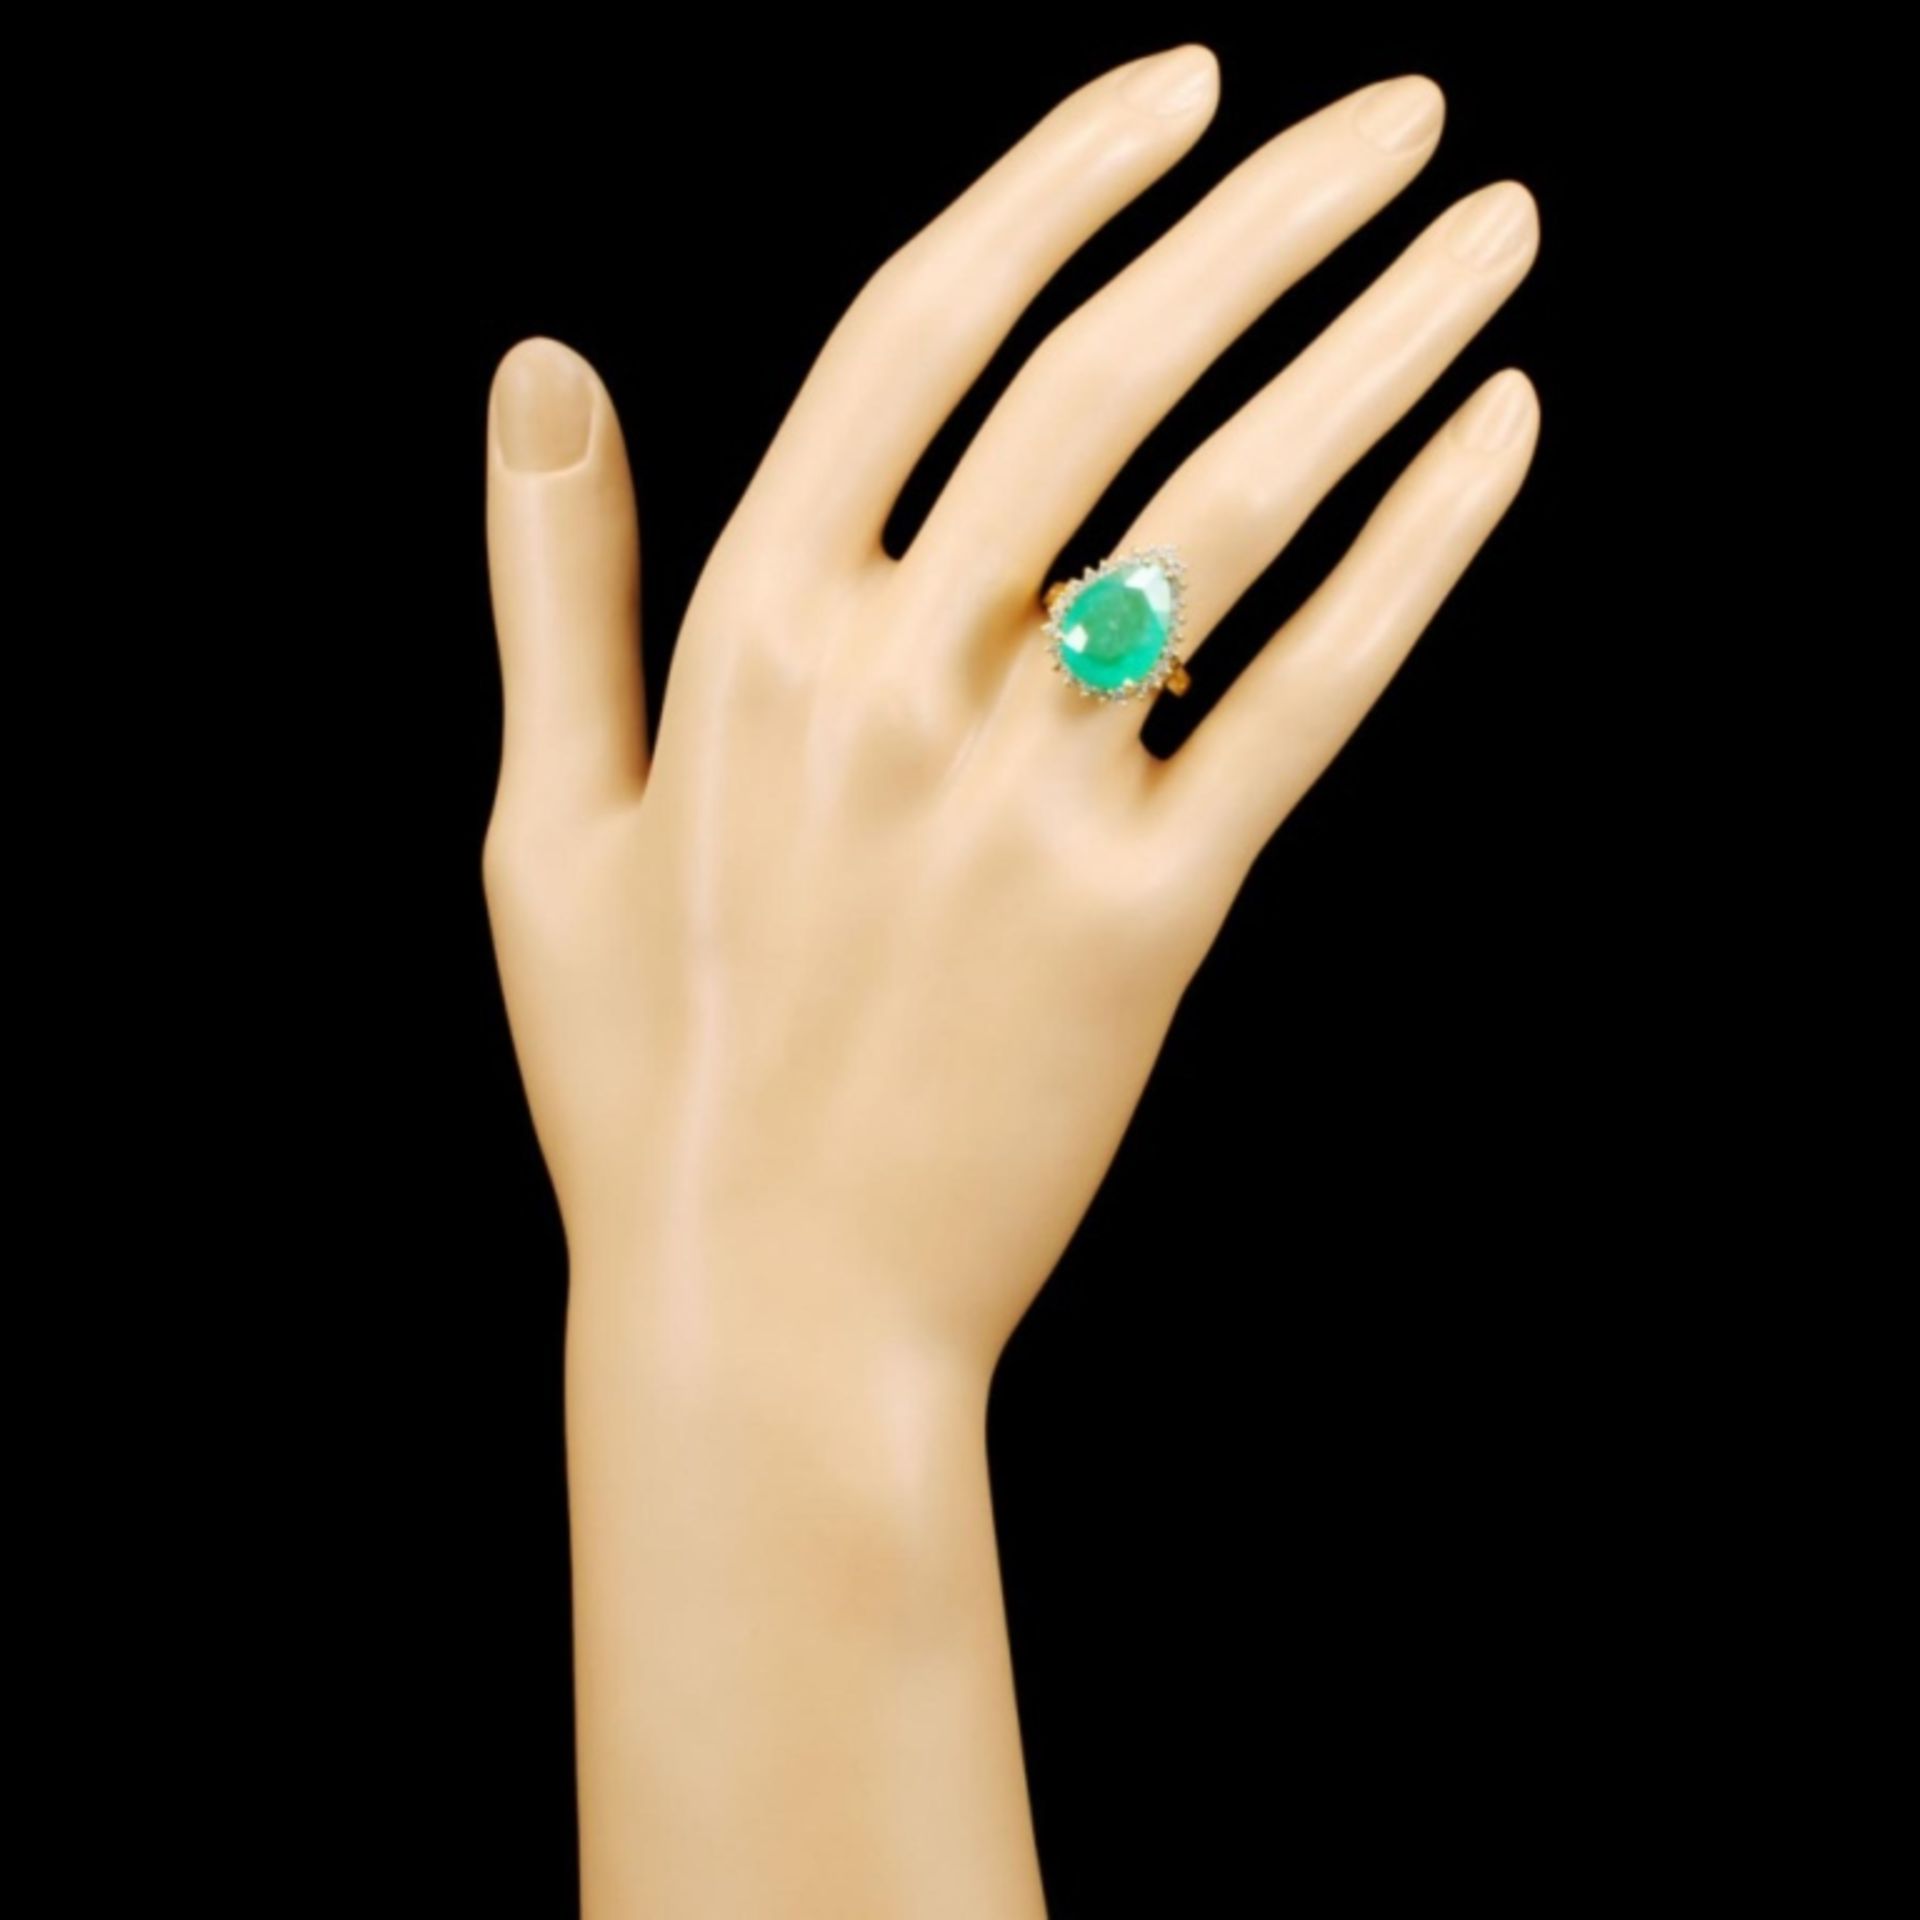 14K Gold 5.14ct Emerald & 0.53ctw Diamond Ring - Image 4 of 5